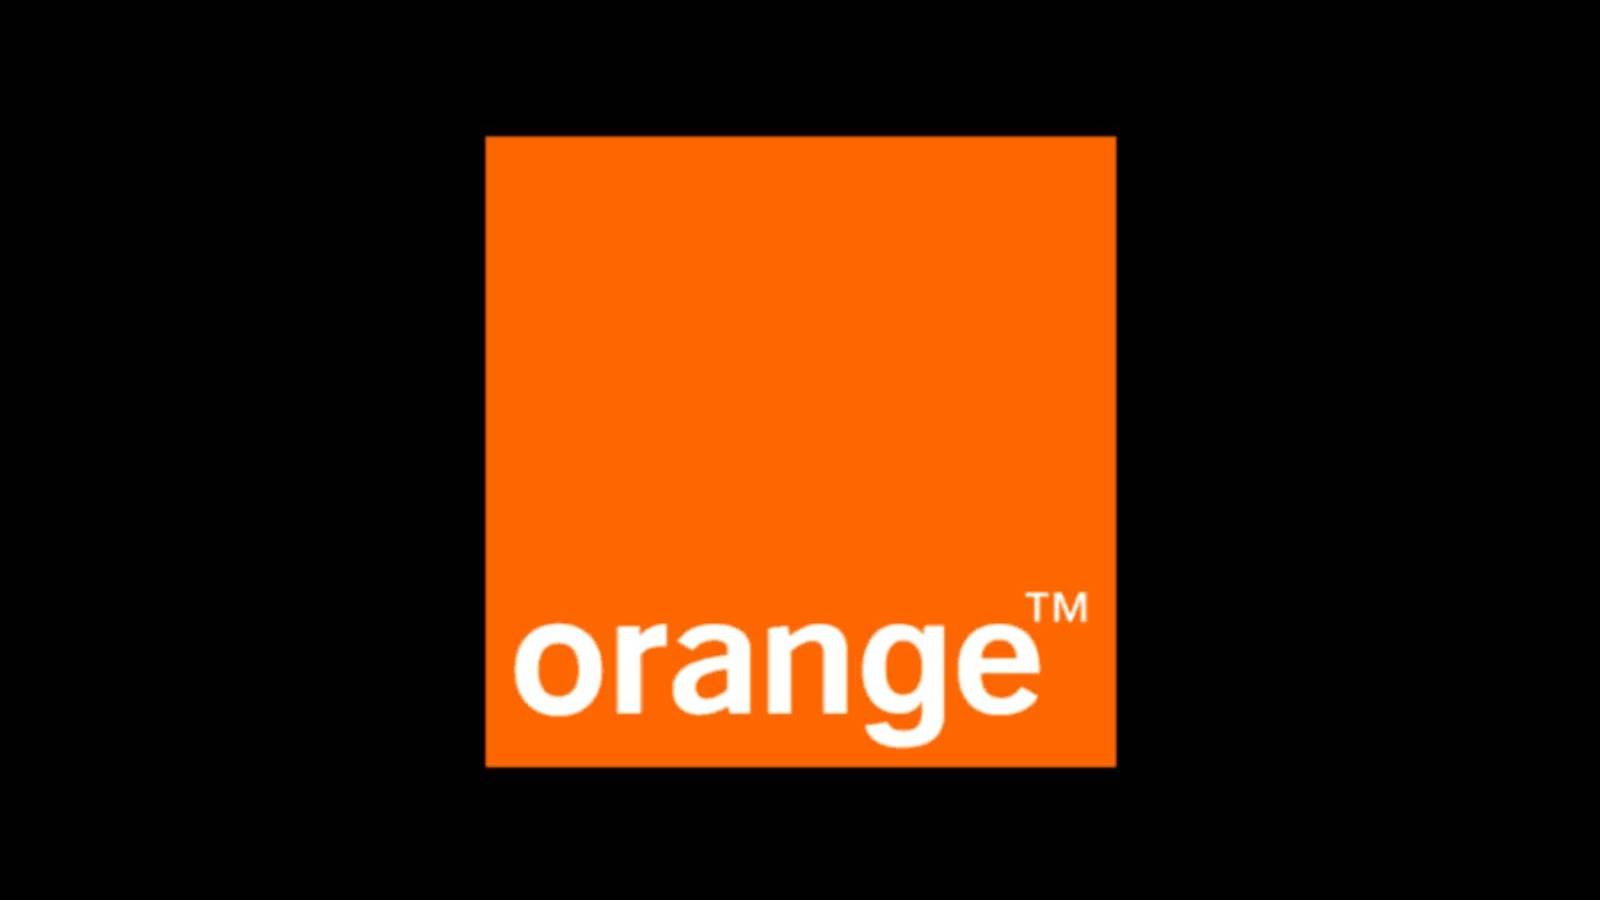 Orange Rumunia ogłasza nowe abonamenty na telewizję internetową